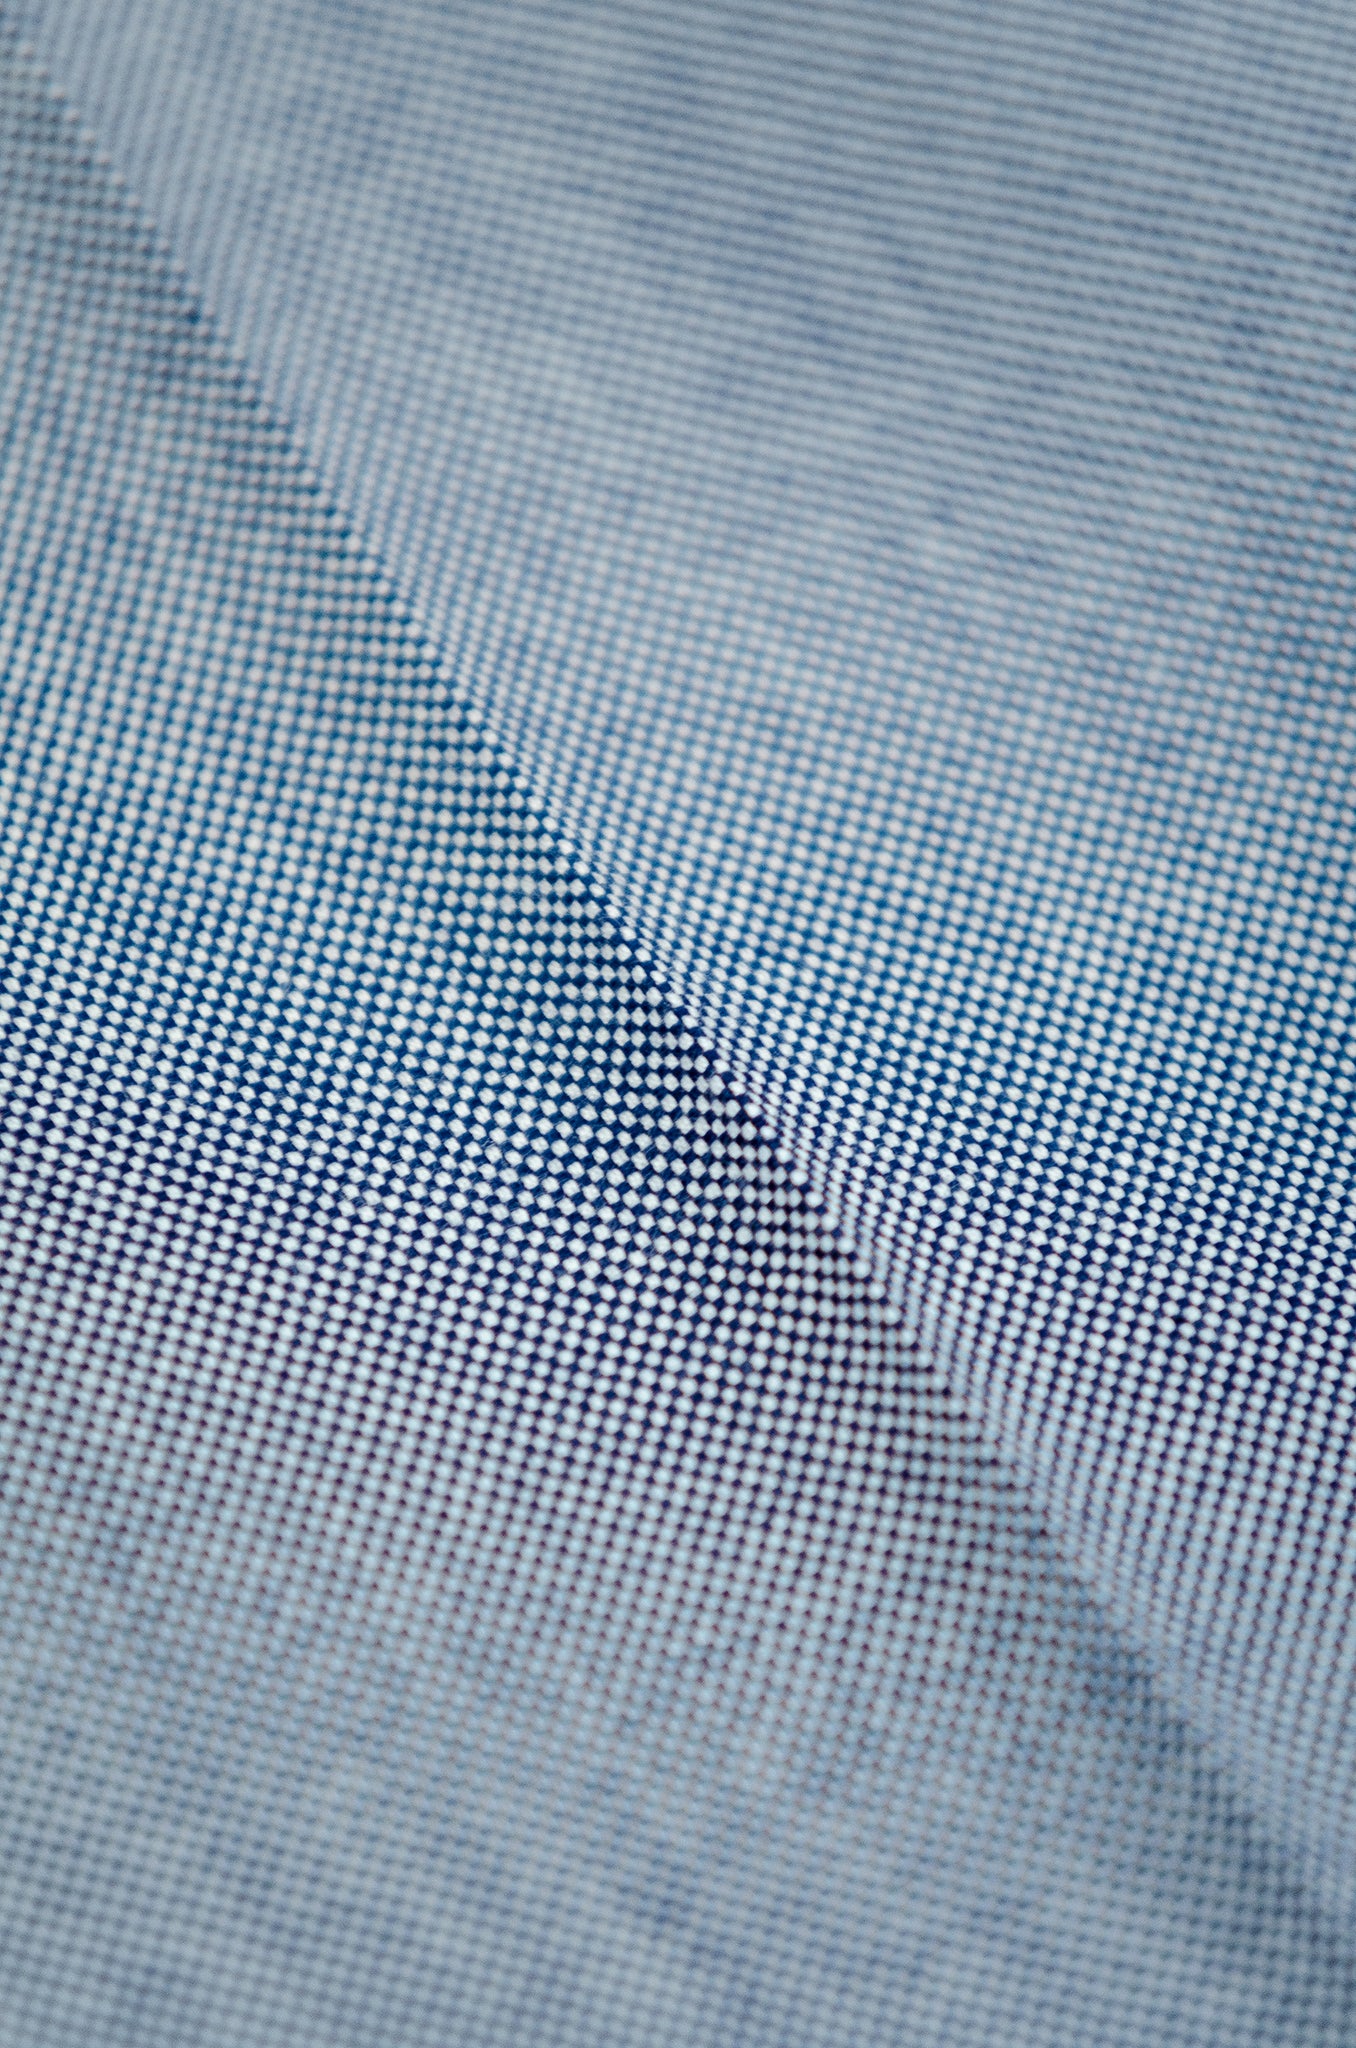 Arbaud chino pants in soft panama cotton (sky blue)